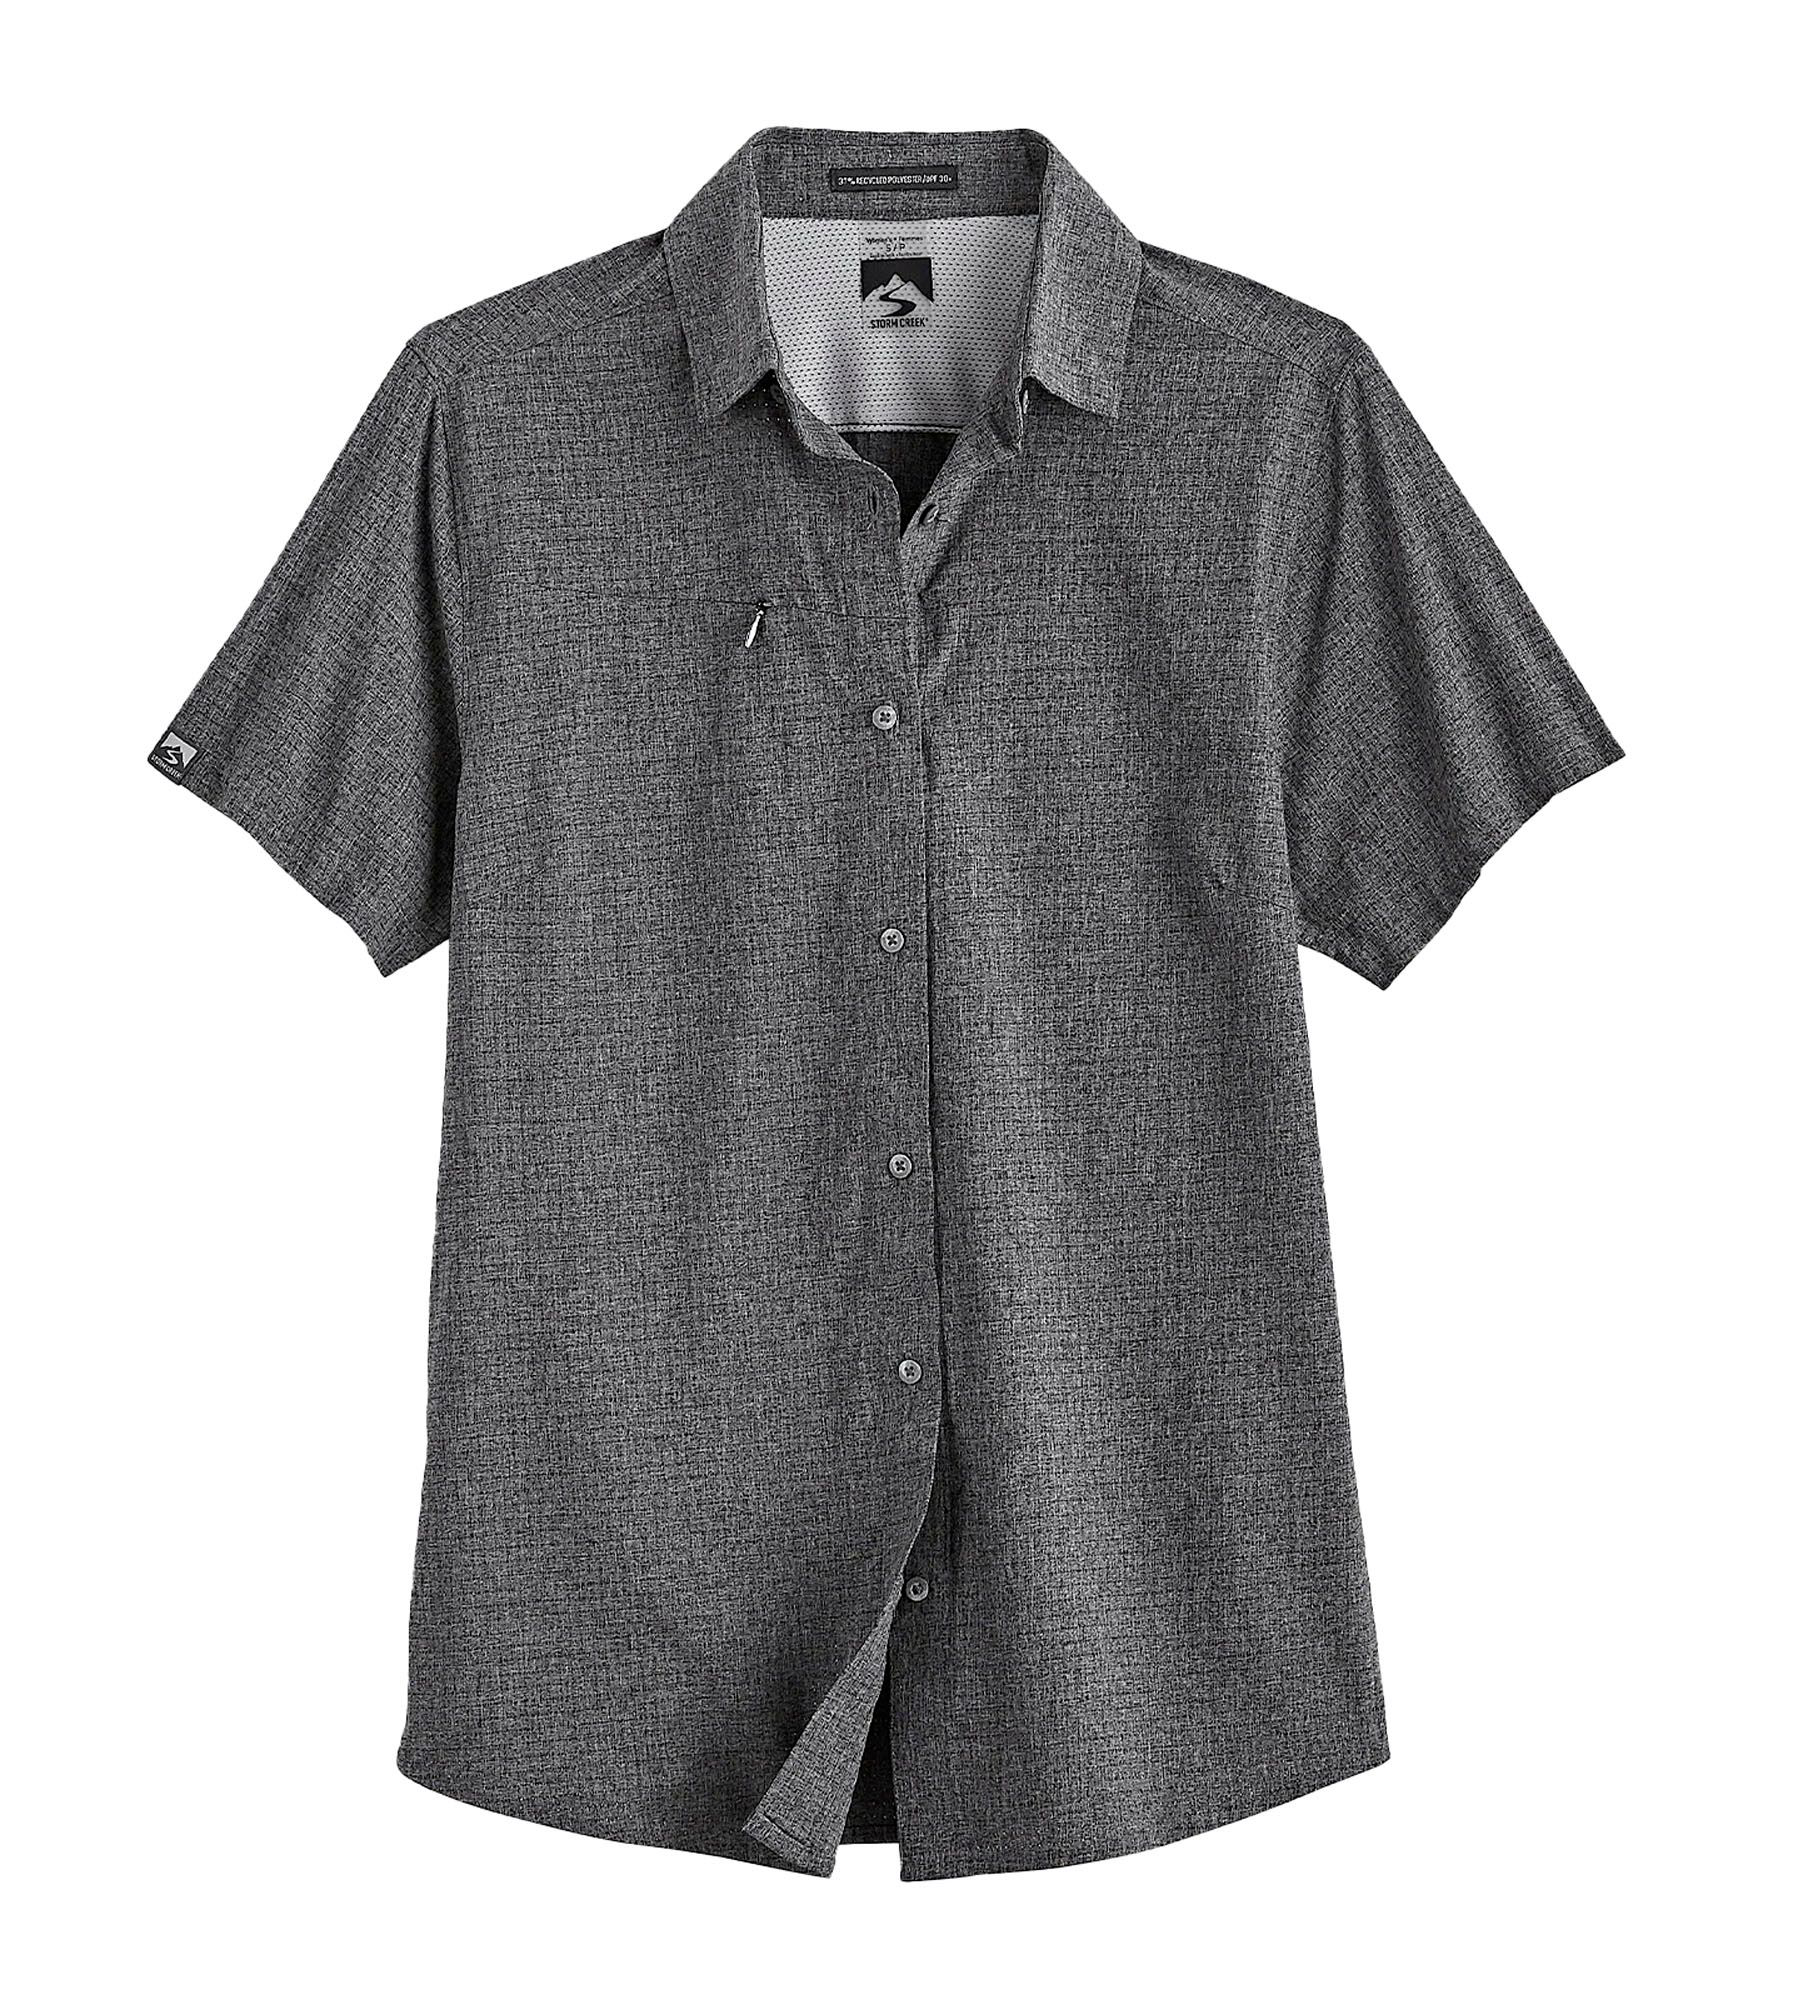 Storm Creek Naturalist Short-Sleeve Shirt for Ladies - Gray - S